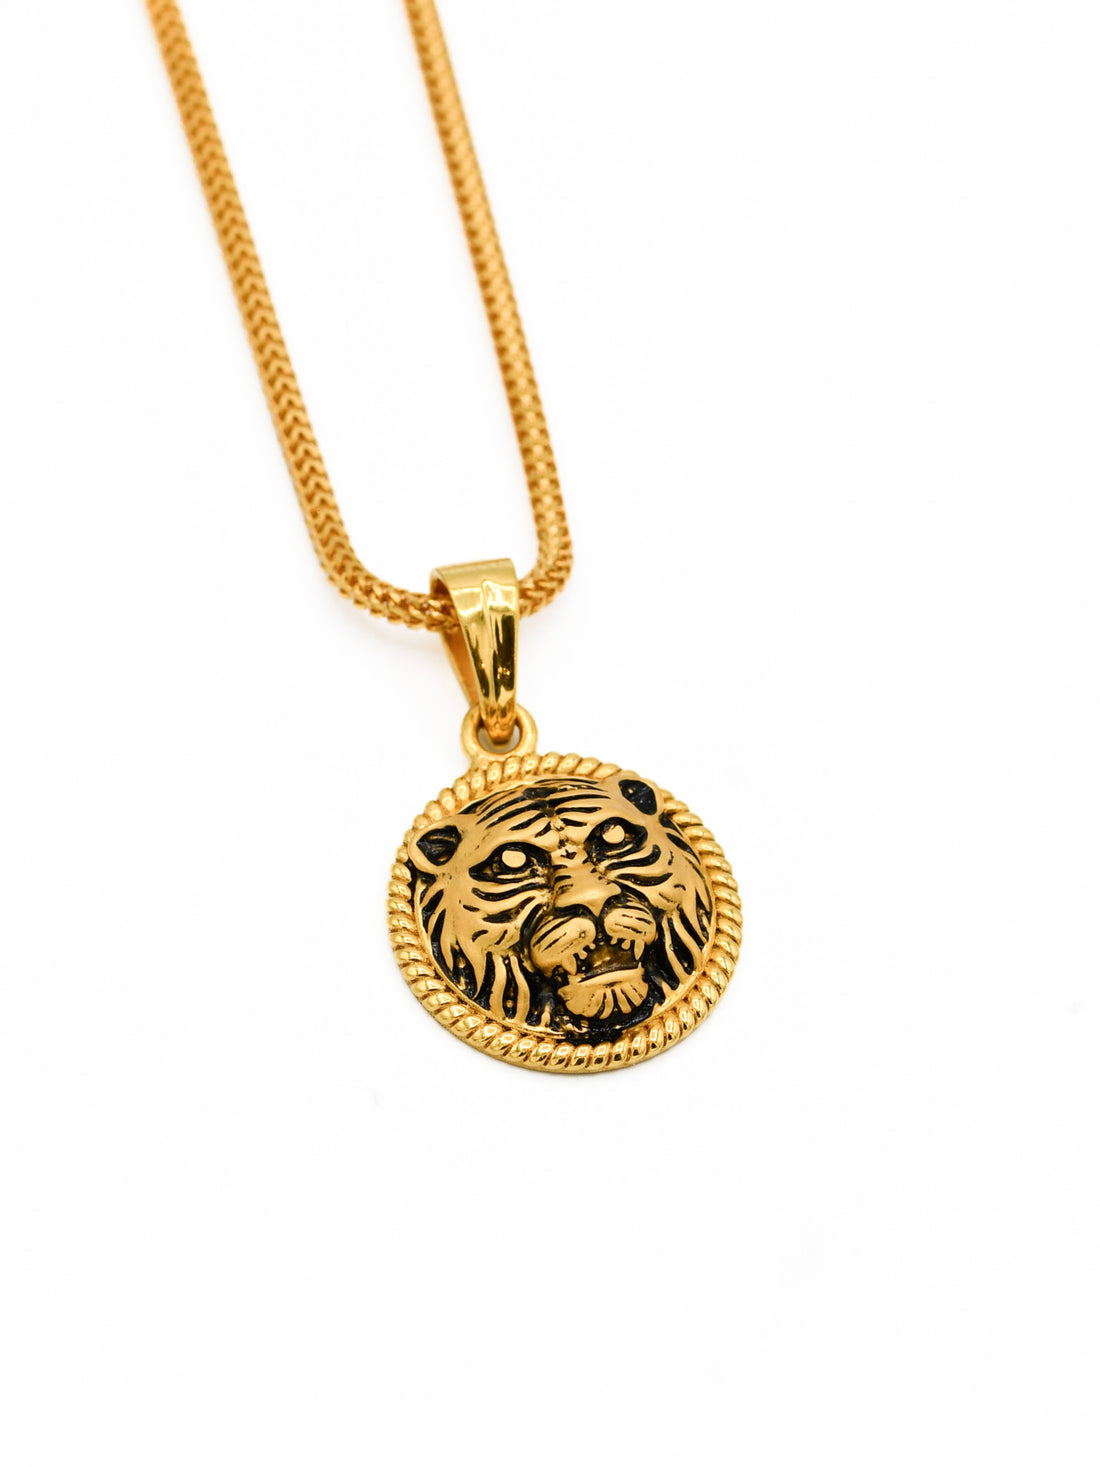 22ct Gold Antique Lion Head Pendant - Roop Darshan